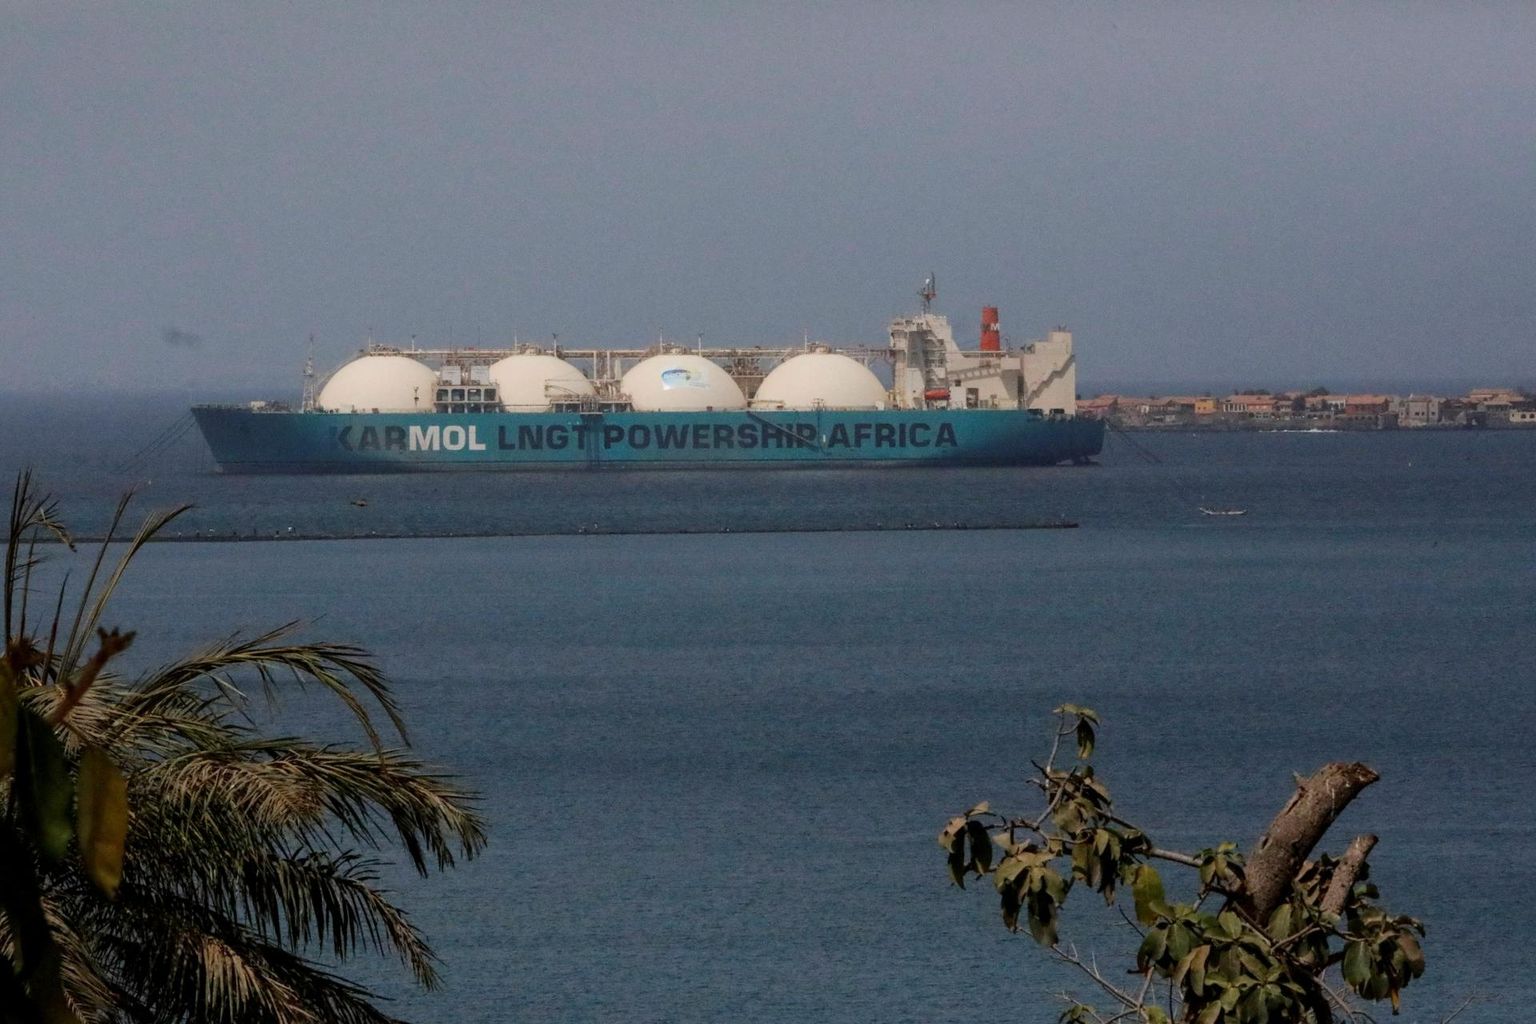 LNG-laev KARMOL LNGT Powership Africa Senegali ranniku lähedal. 